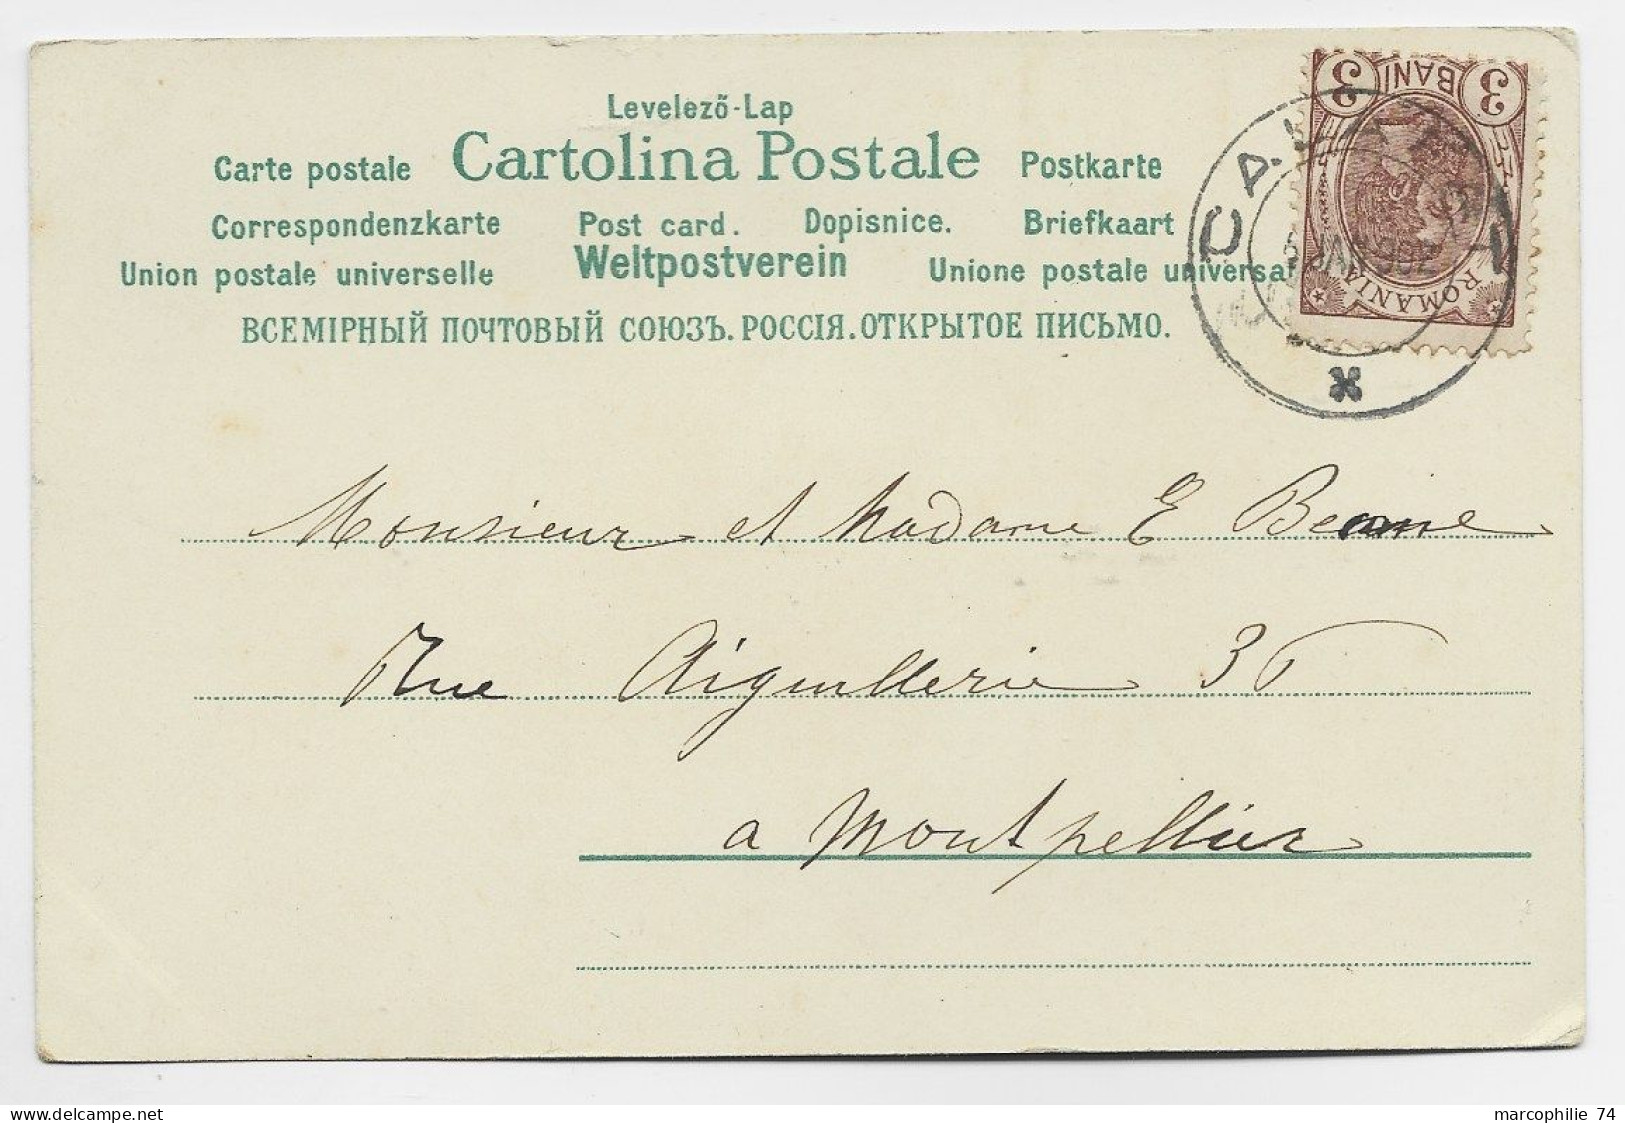 ROMANIA ROUMANIE 3 BANI  CAVAFAT 5 JAN 1902 SOLO CARTA POSTALA  FANTAISE TO FRANCE - Briefe U. Dokumente